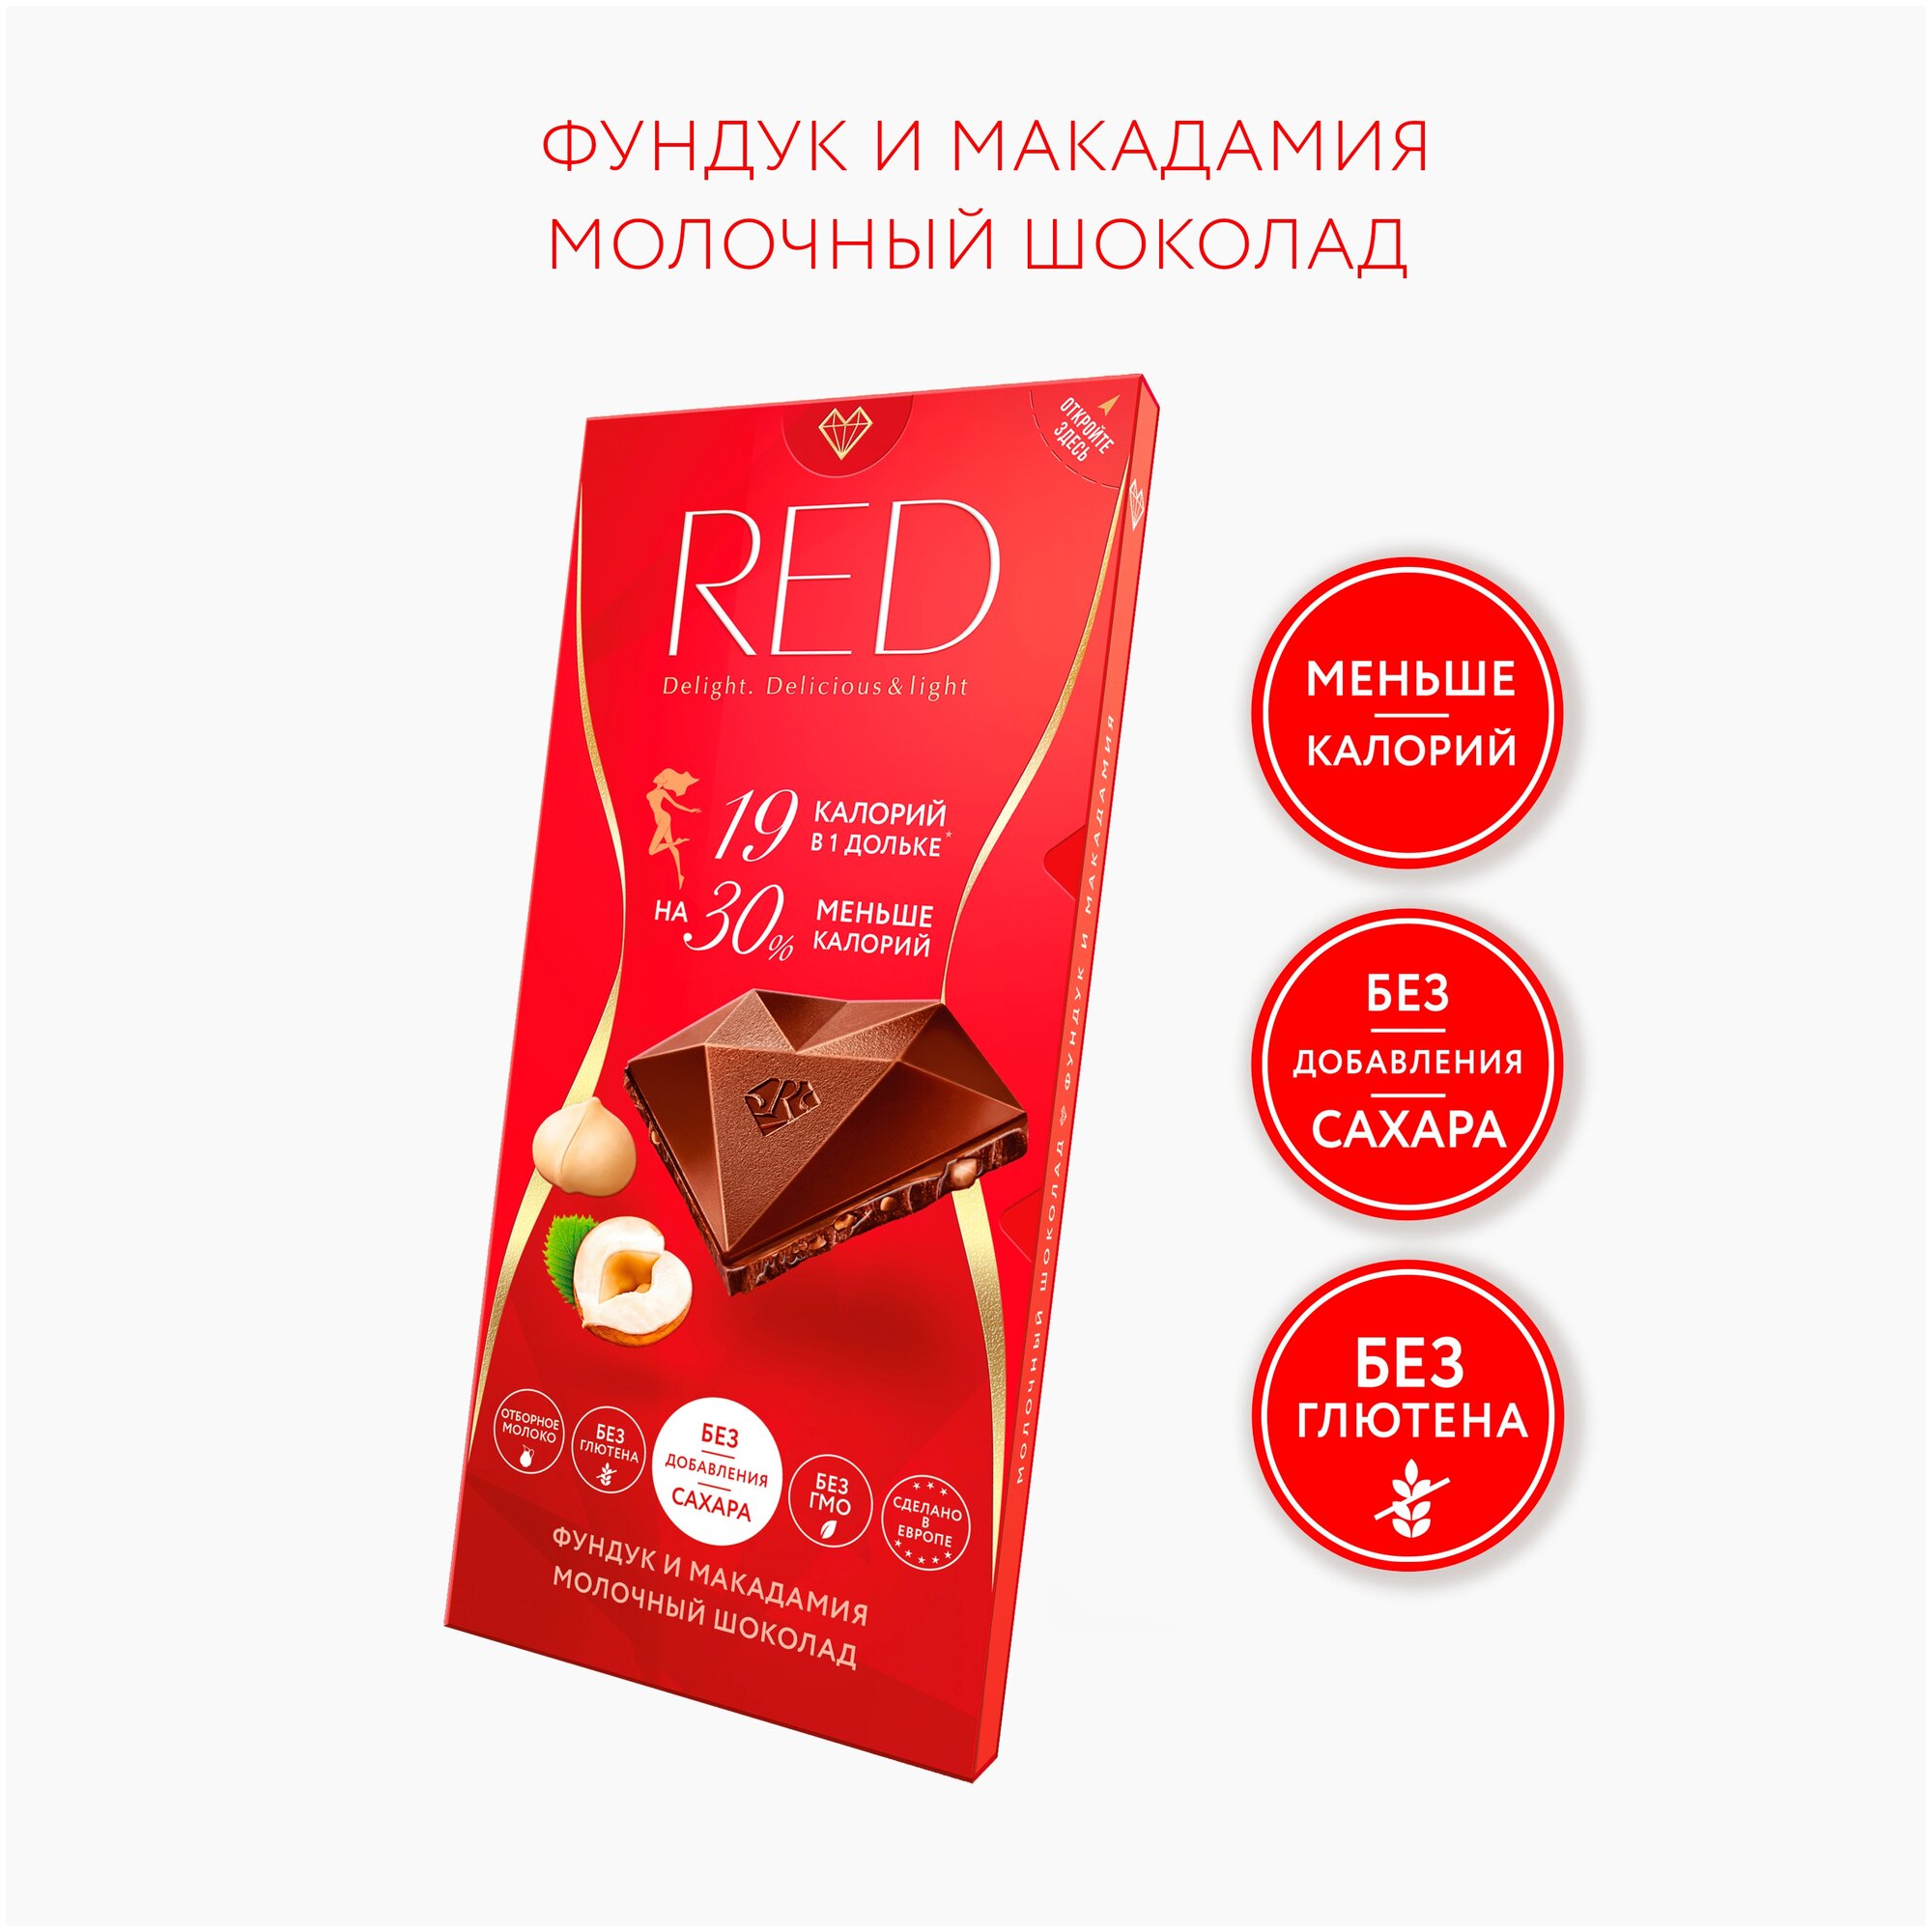 Шоколад Red Молочный Фундук и Макадамия 85г - фото №1